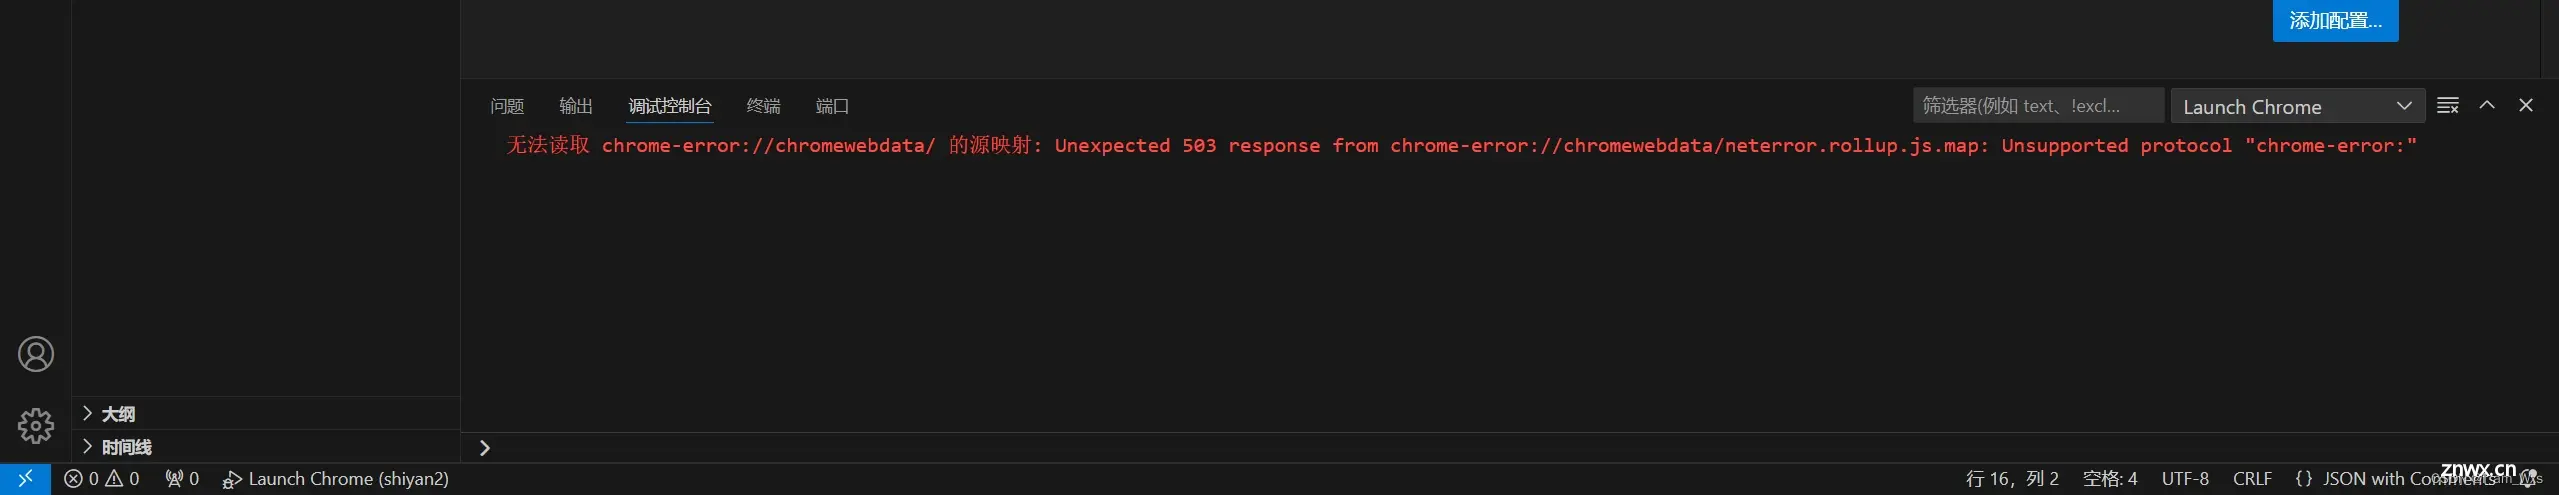 无法读取 chrome-error://chromewebdata/ 的源映射: Unexpected 503 response from chrome-error://chromewebdata/